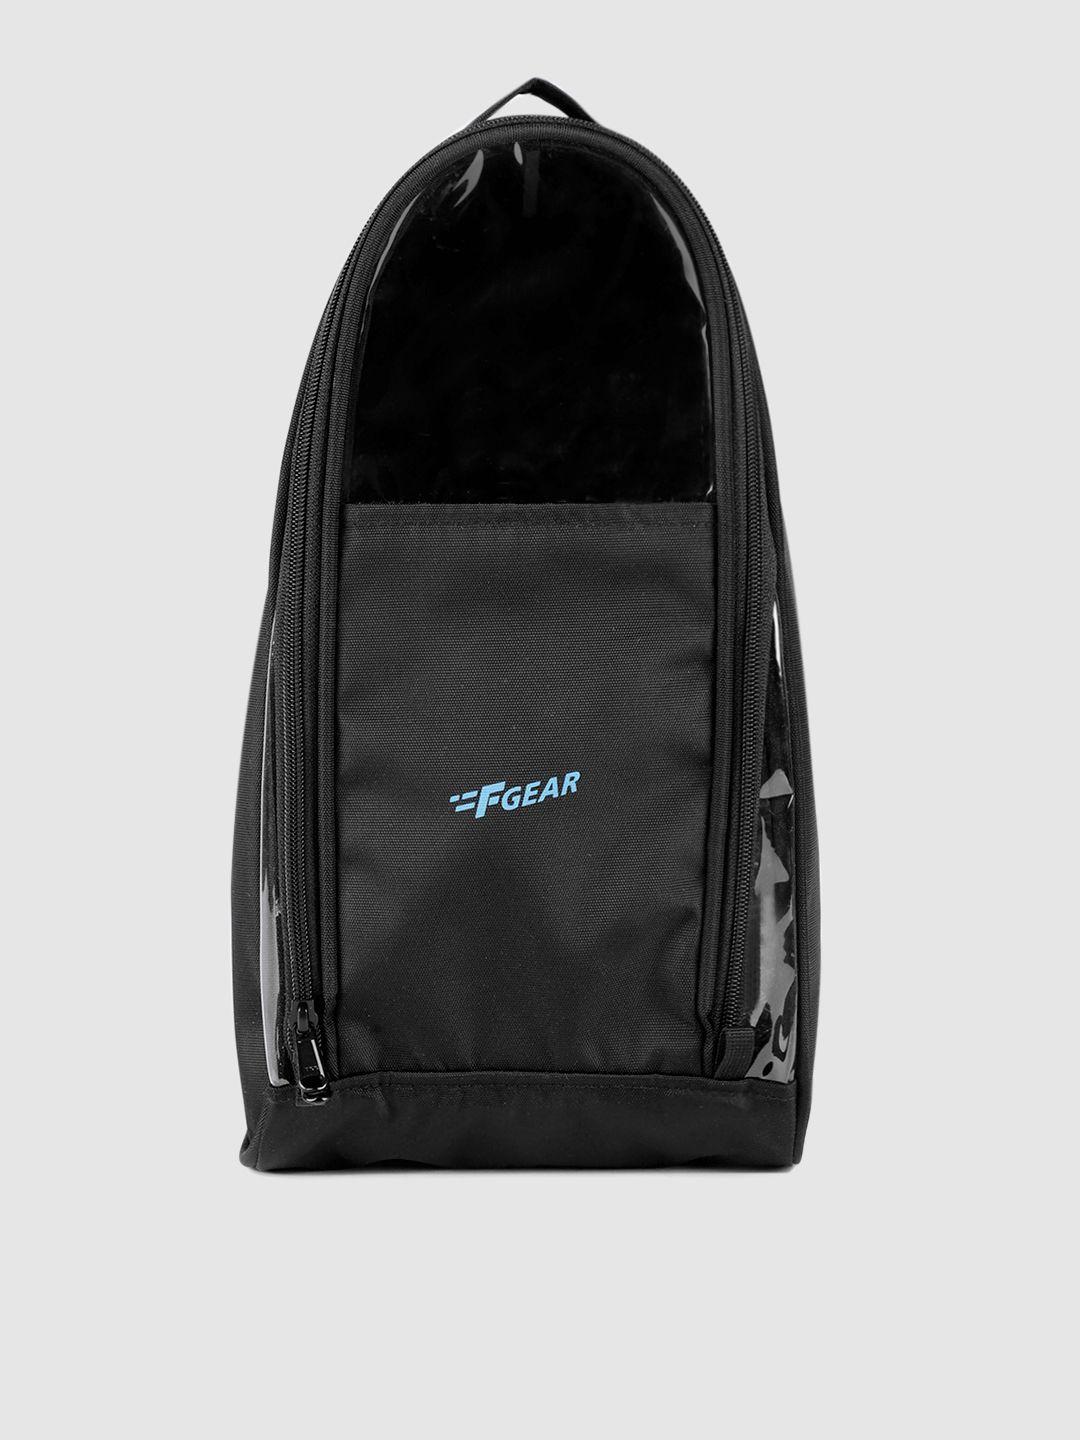 f gear black supio shoe bag